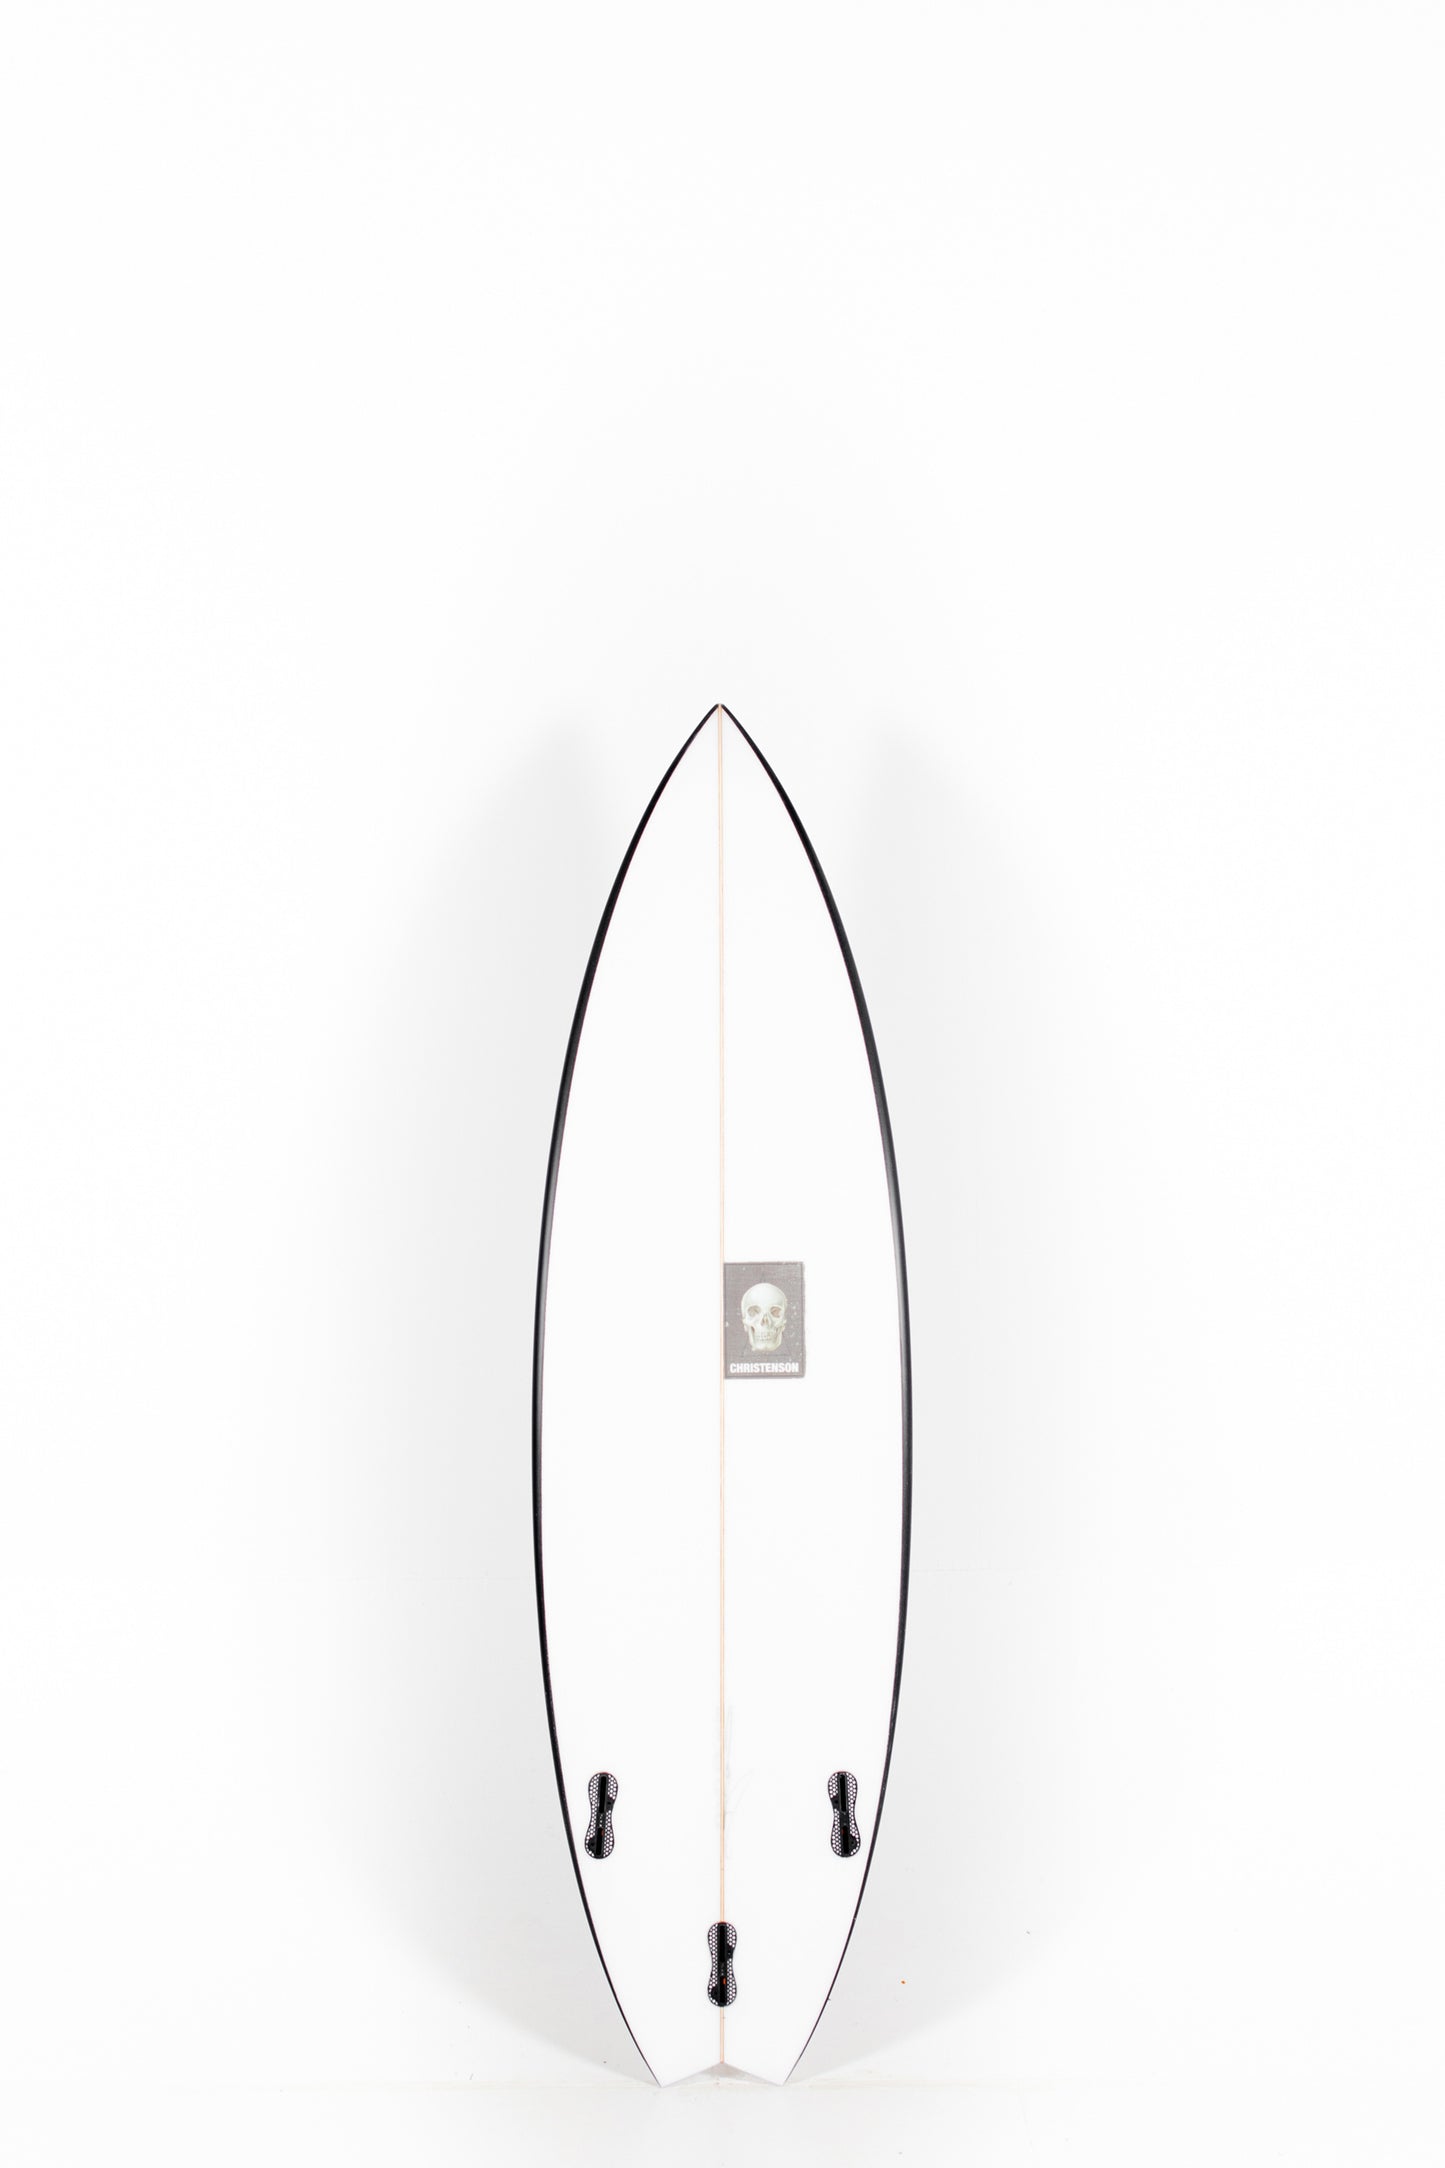 Pukas Surf Shop - Chris Christenson Surfboard  - GERR by Chris Christenson - 5’10” x 19 x 2 5/16 - CX03366